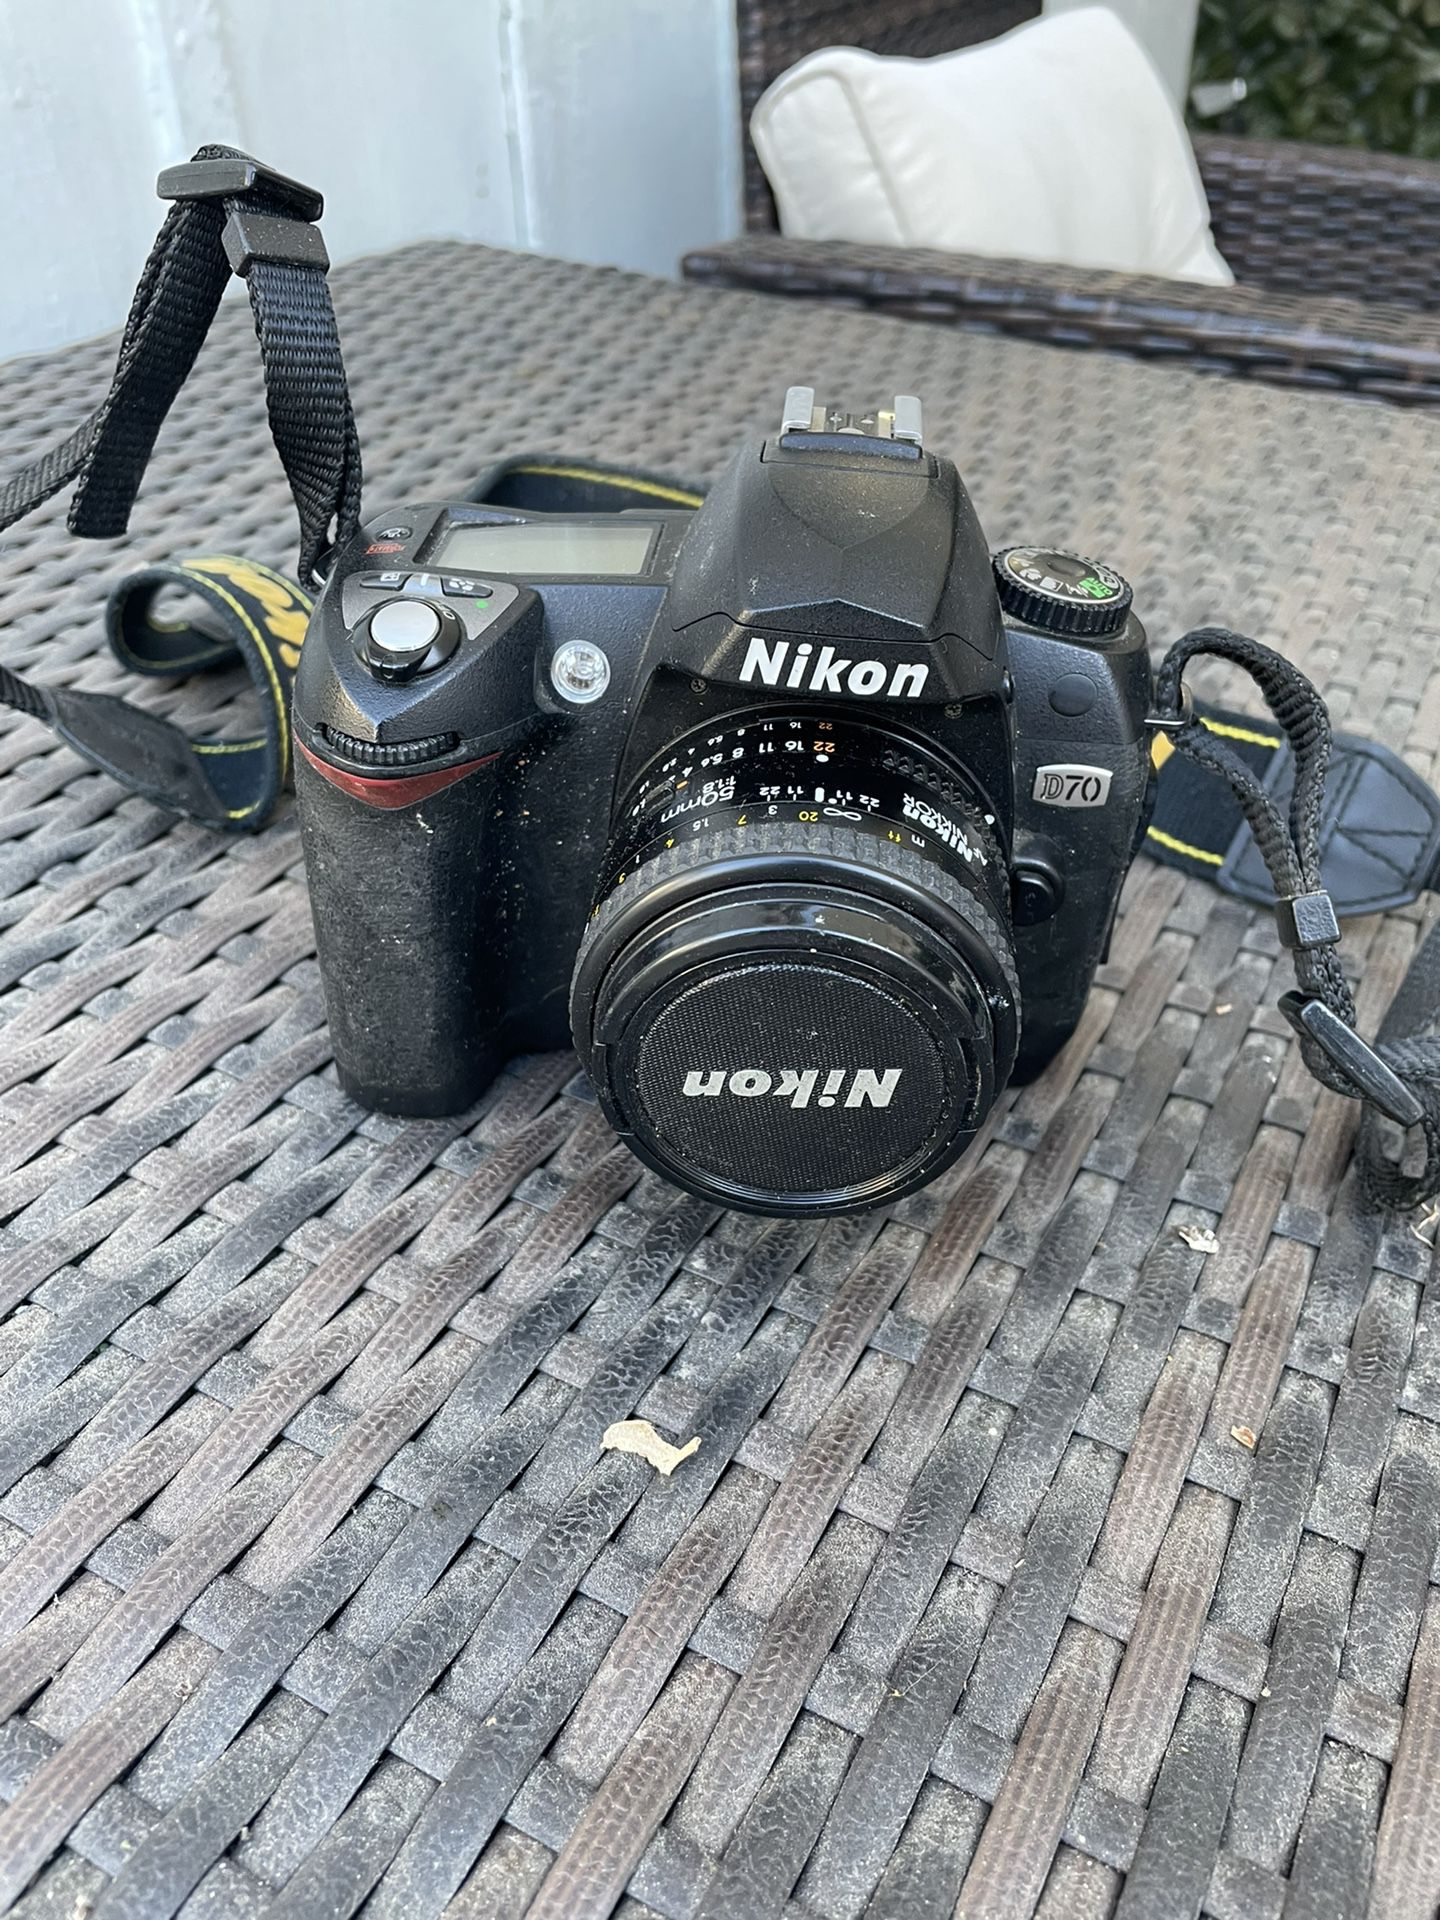 Nikon D70 With 50mm Lens